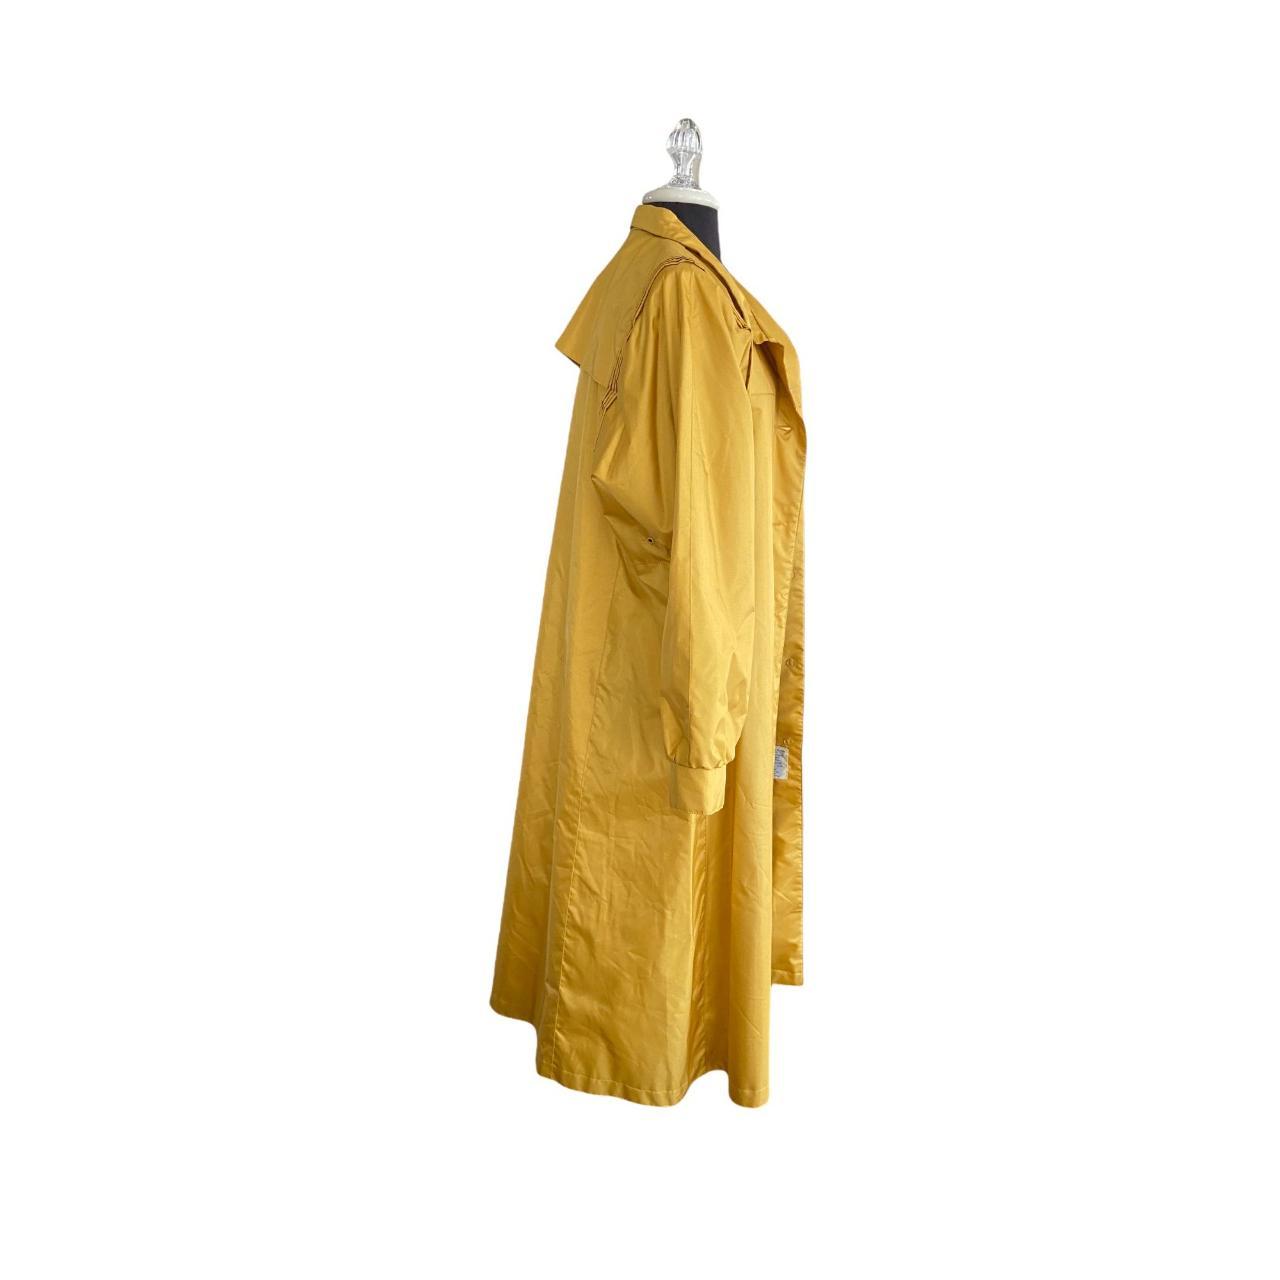 Liz Thomas Vintage Mustard Raincoat (Size 15/16) - Depop